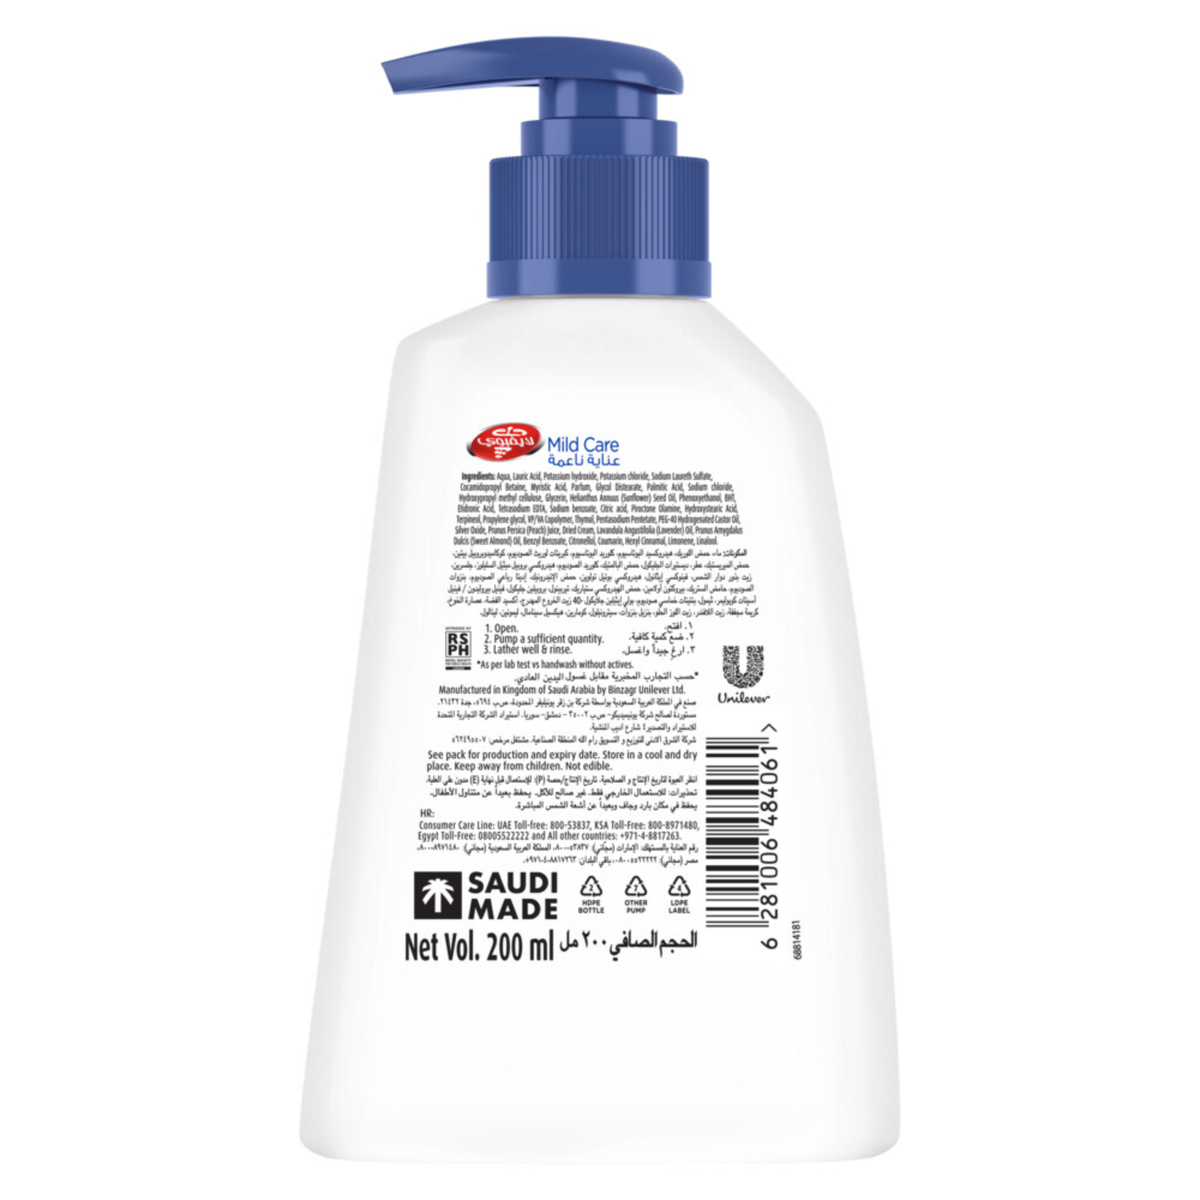 Lifebuoy Antibacterial Mild Care Handwash 200 ml